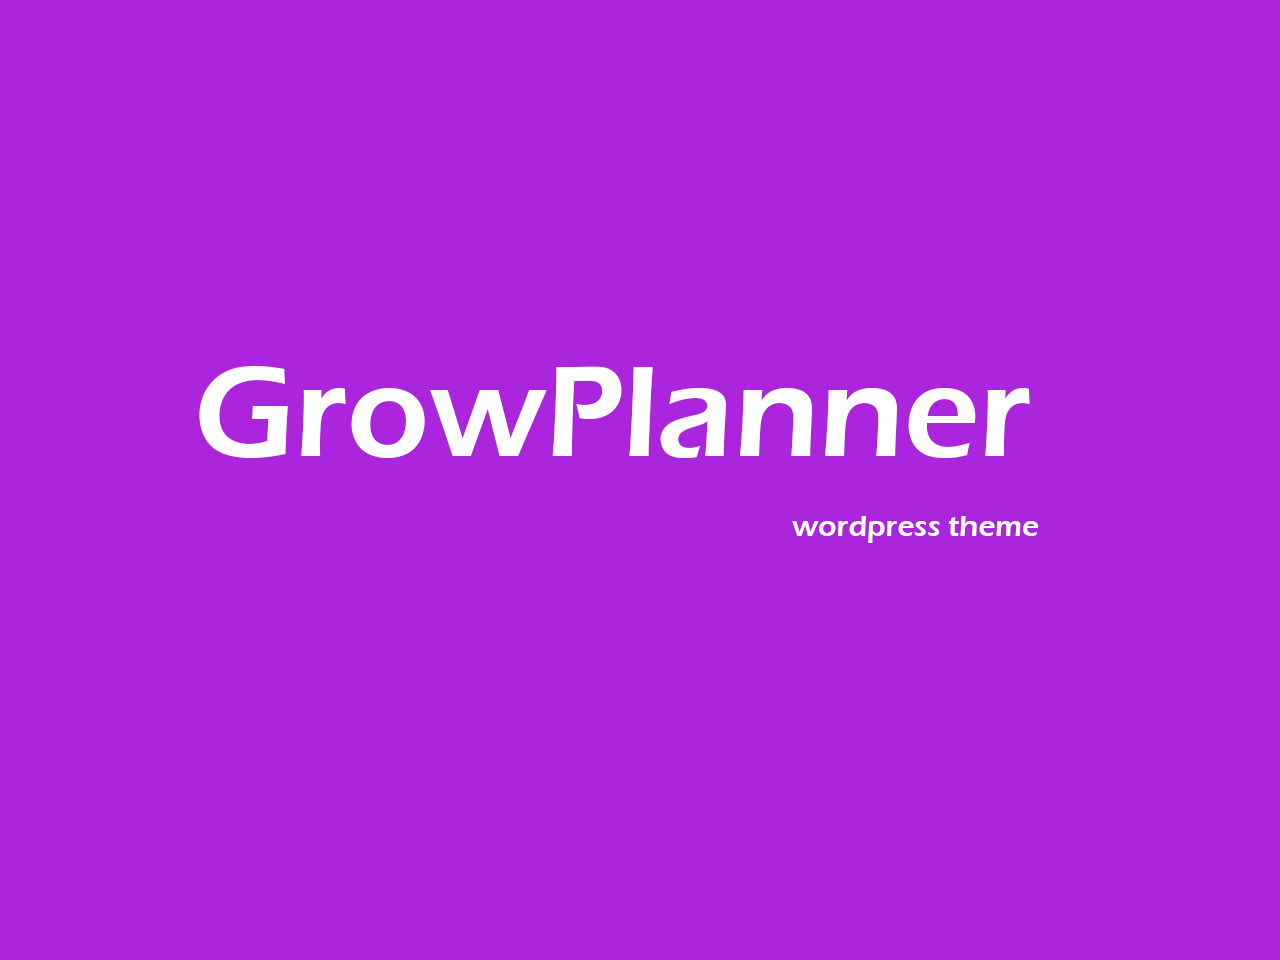 growplanner-wordpress-theme-tmrc5-o.jpg